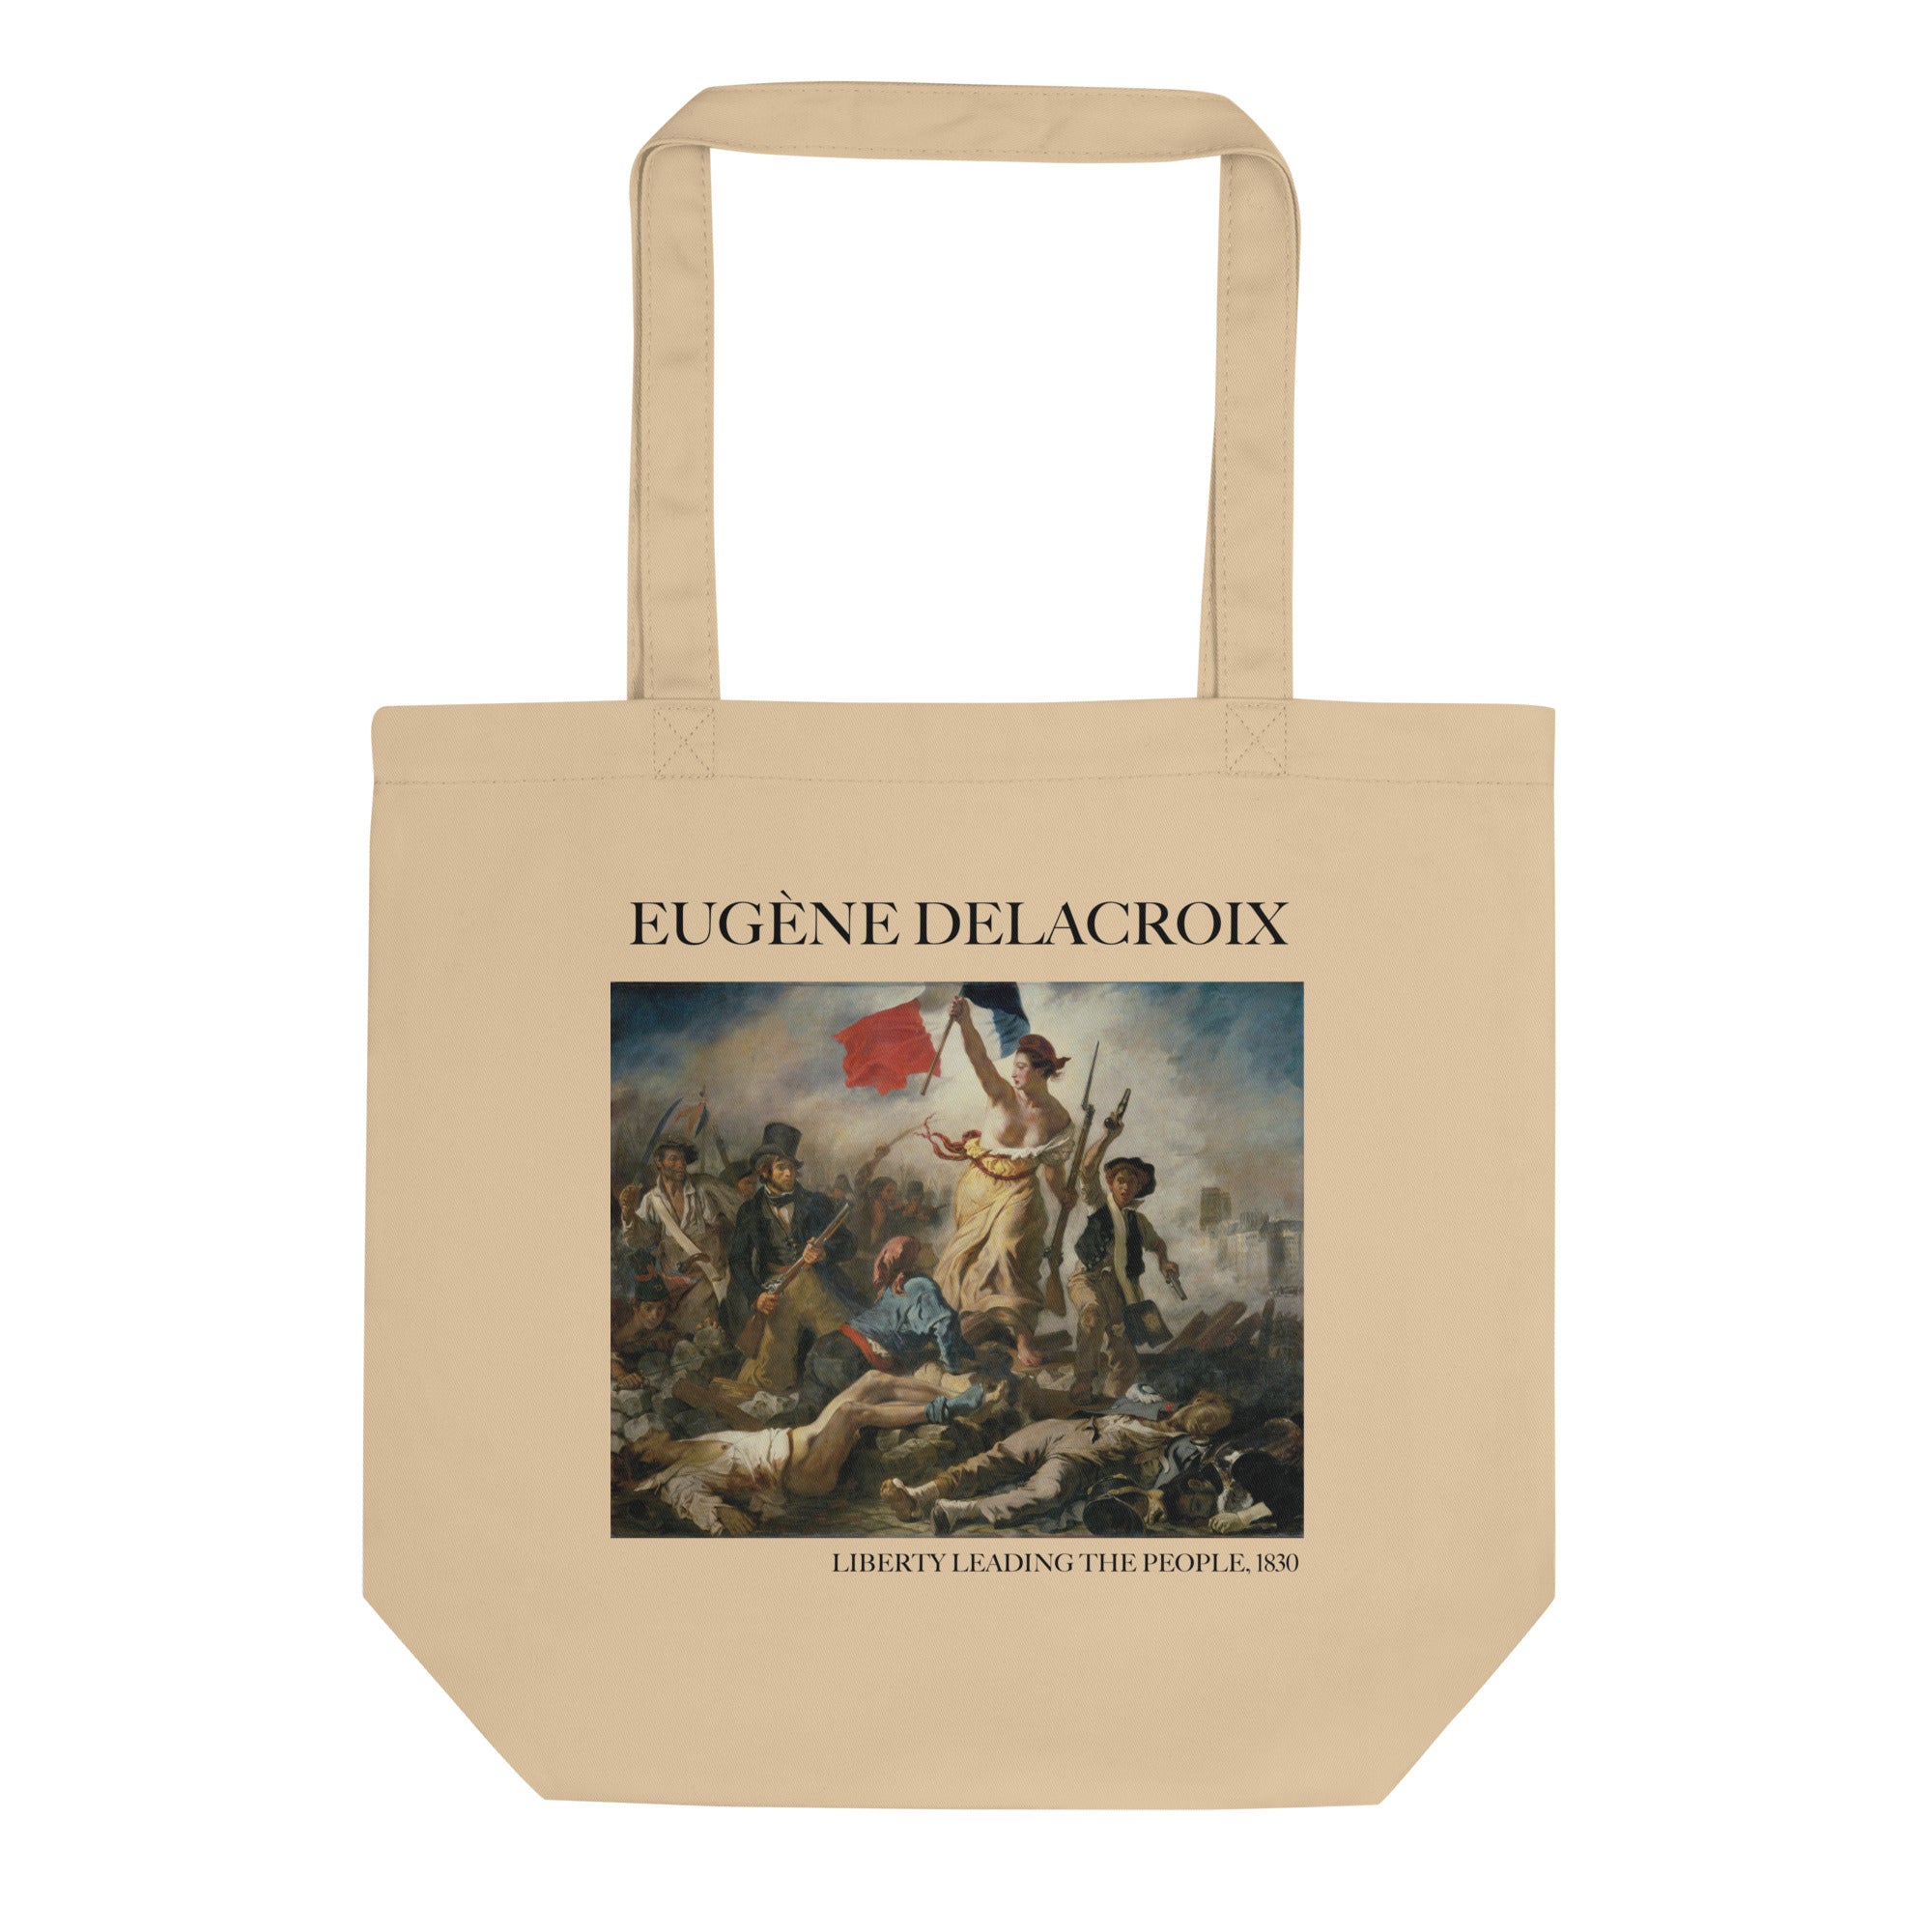 Eugène Delacroix 'Liberty Leading the People' Famous Painting Totebag | Eco Friendly Art Tote Bag